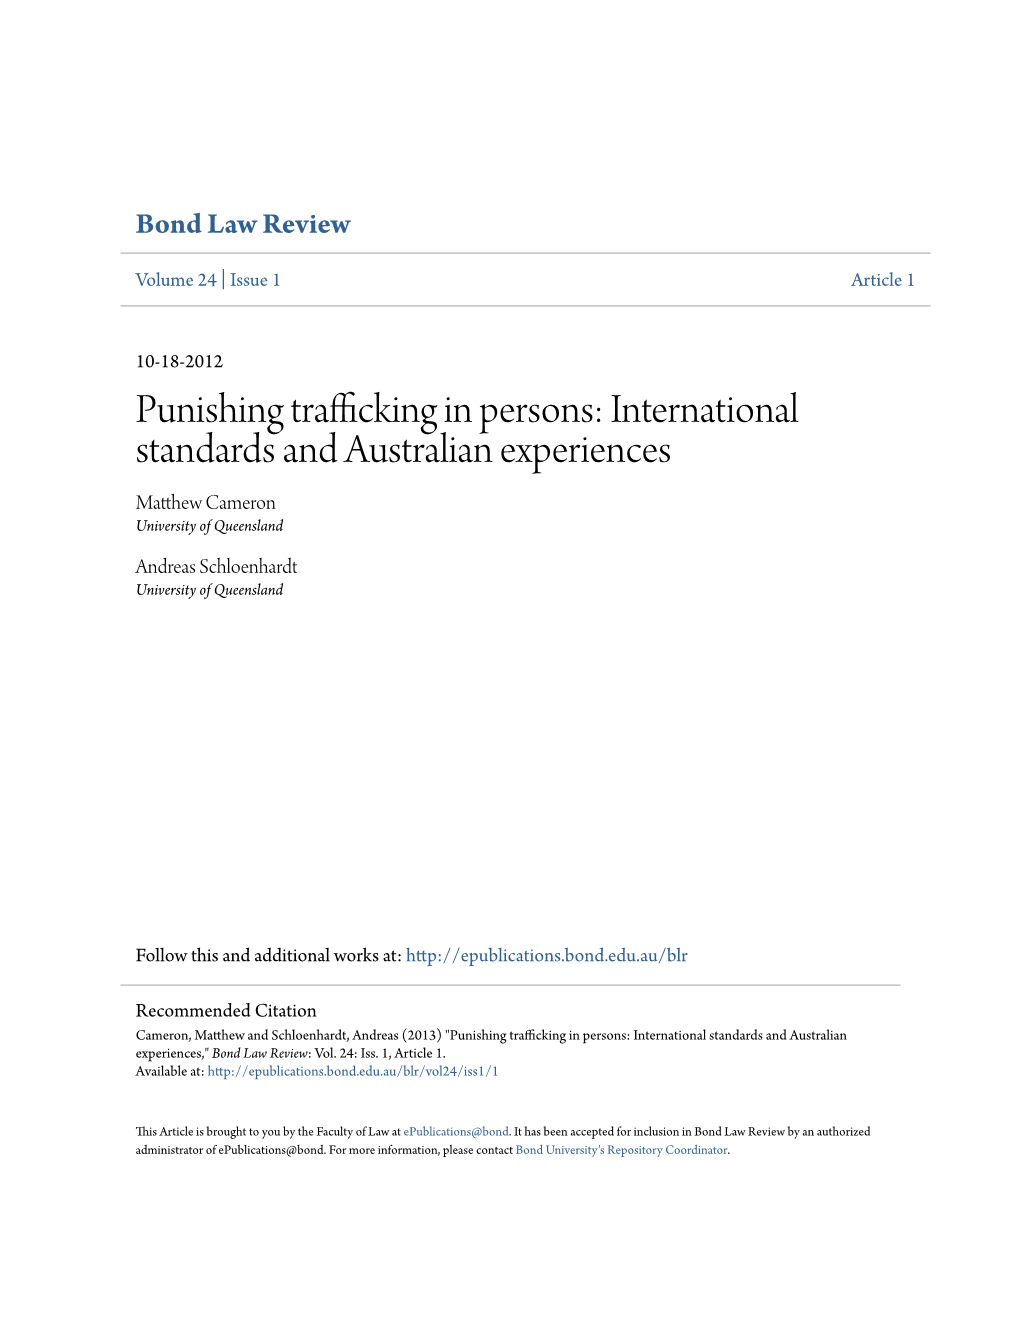 Punishing Trafficking in Persons: International Standards and Australian Experiences Matthew Ac Meron University of Queensland